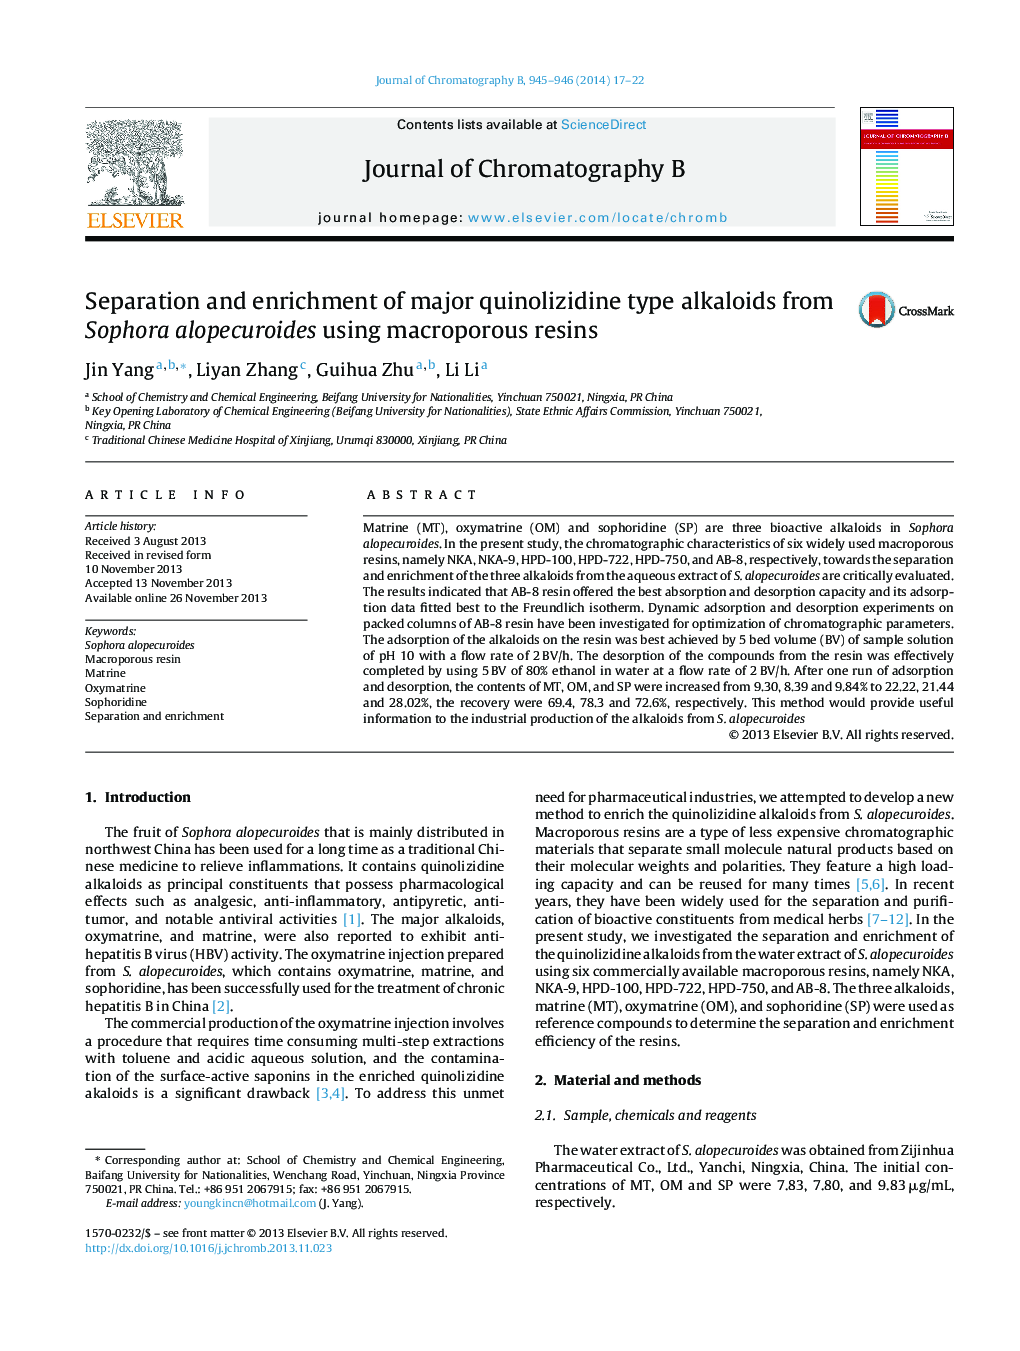 Separation and enrichment of major quinolizidine type alkaloids from Sophora alopecuroides using macroporous resins